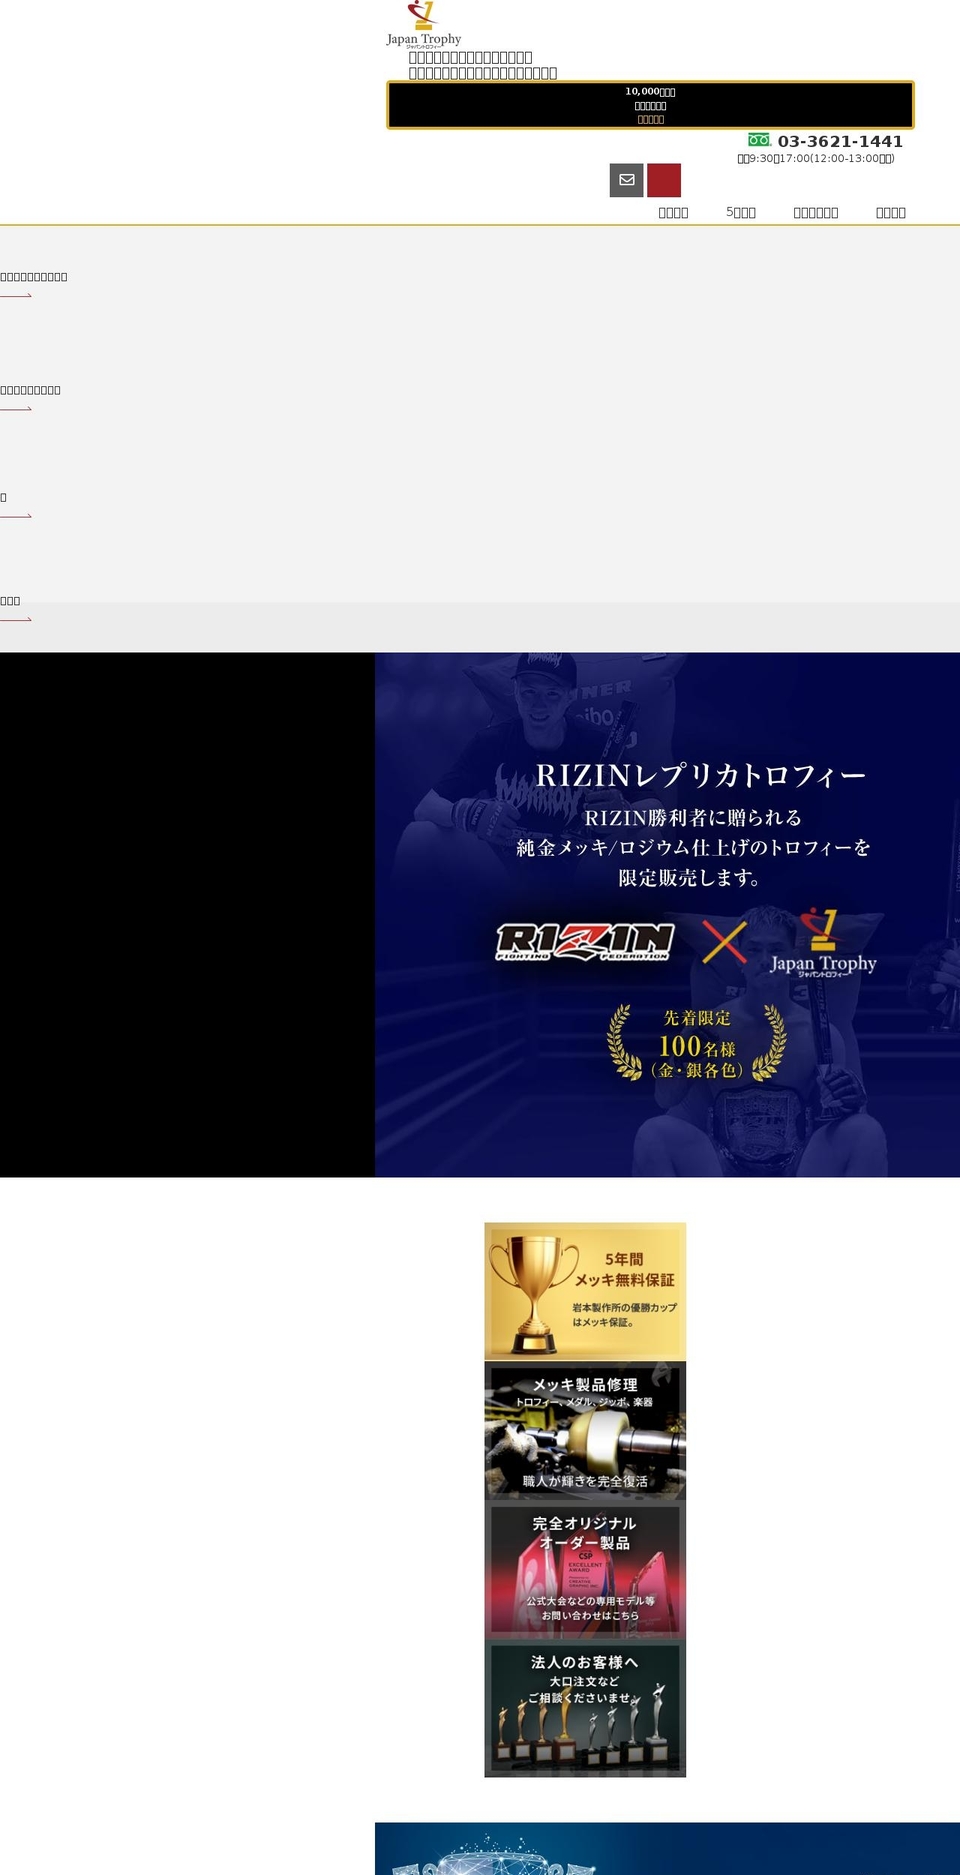 japan-trophy.jp shopify website screenshot